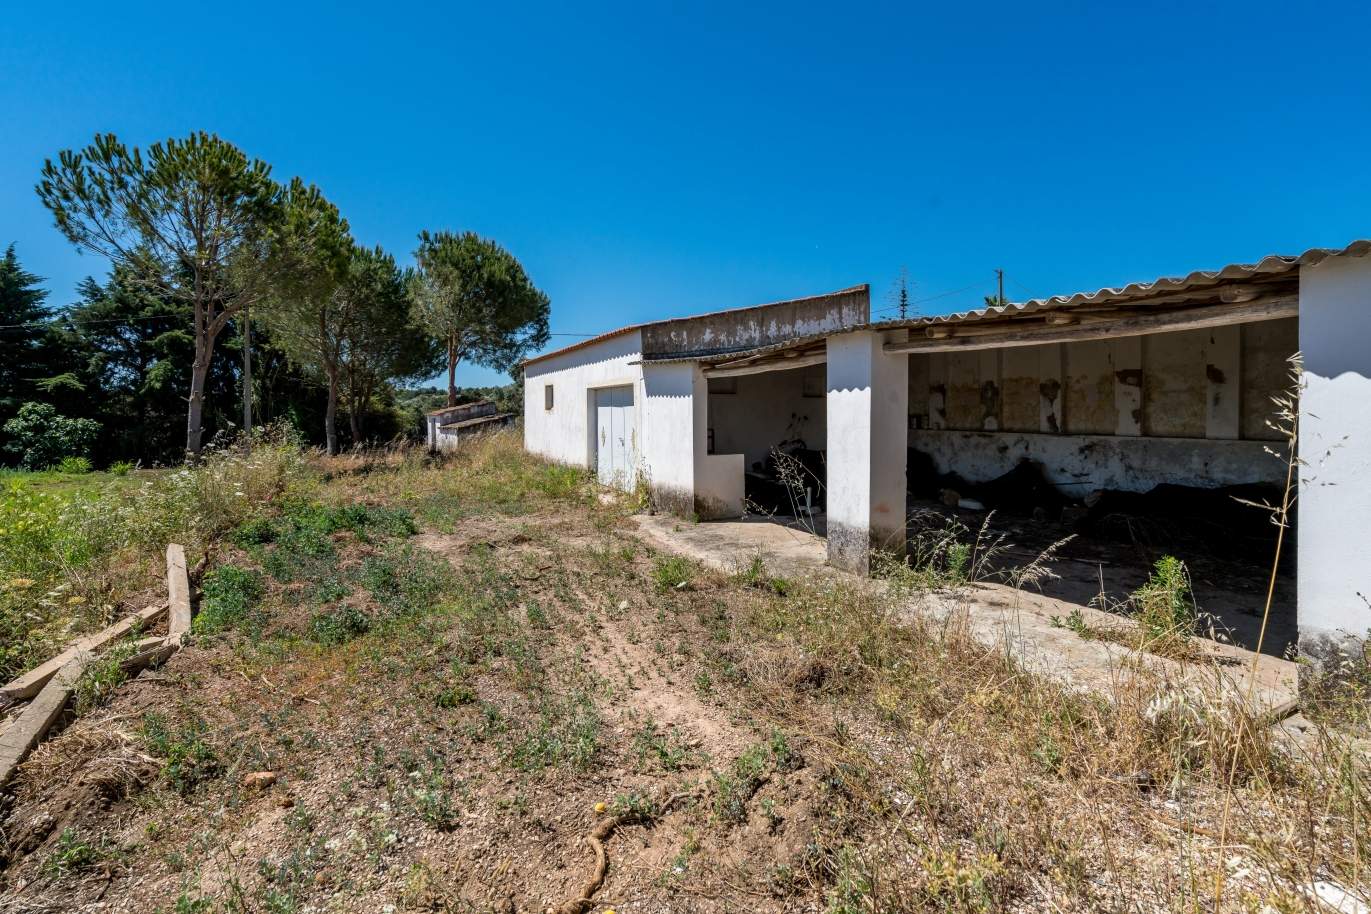 Immobilienverkauf in Alcantarilha, Silves, Algarve, Portugal_105715